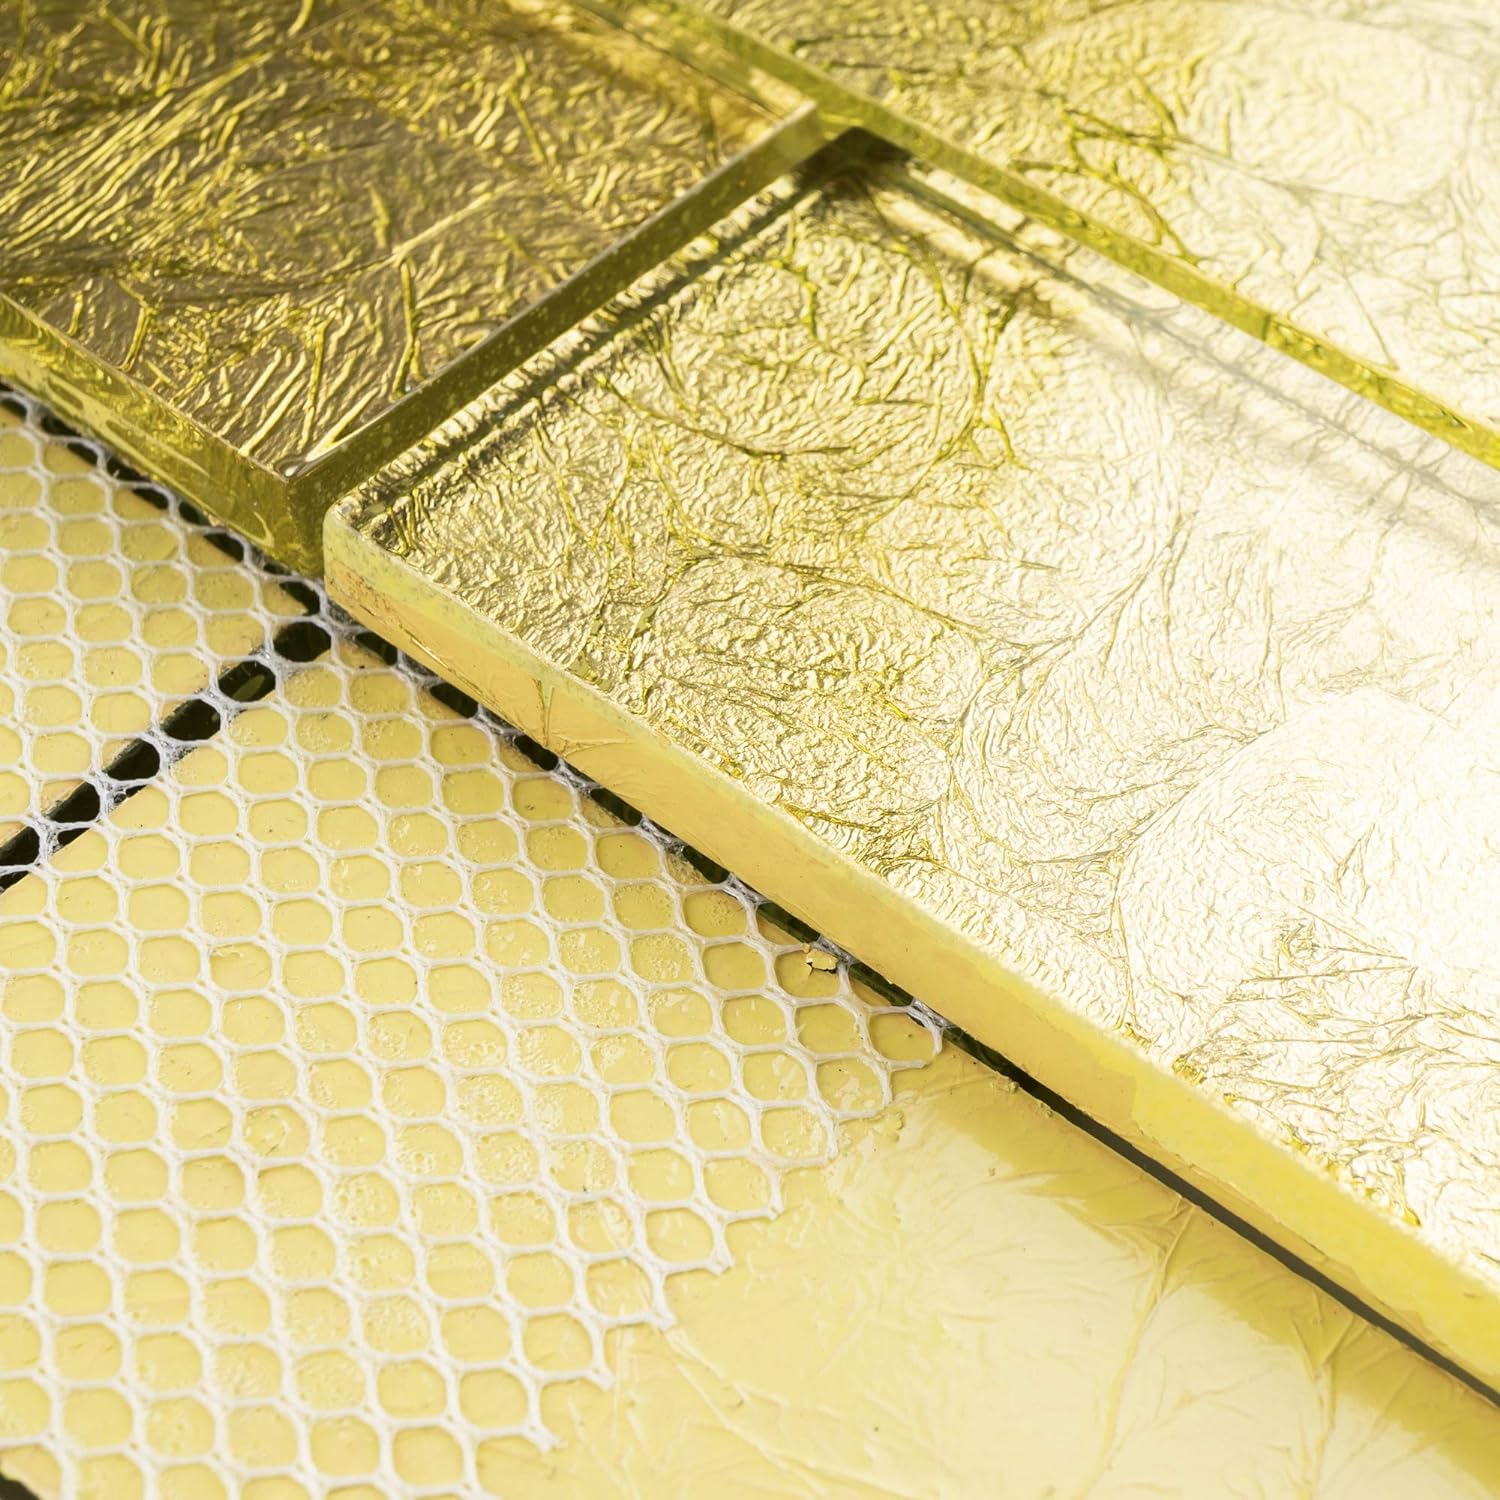 TGKG-01 Gold 2x4 Glass Mosaic Tile Sheet Subway Tile -Kitchen and Bath backsplash Wall Tile